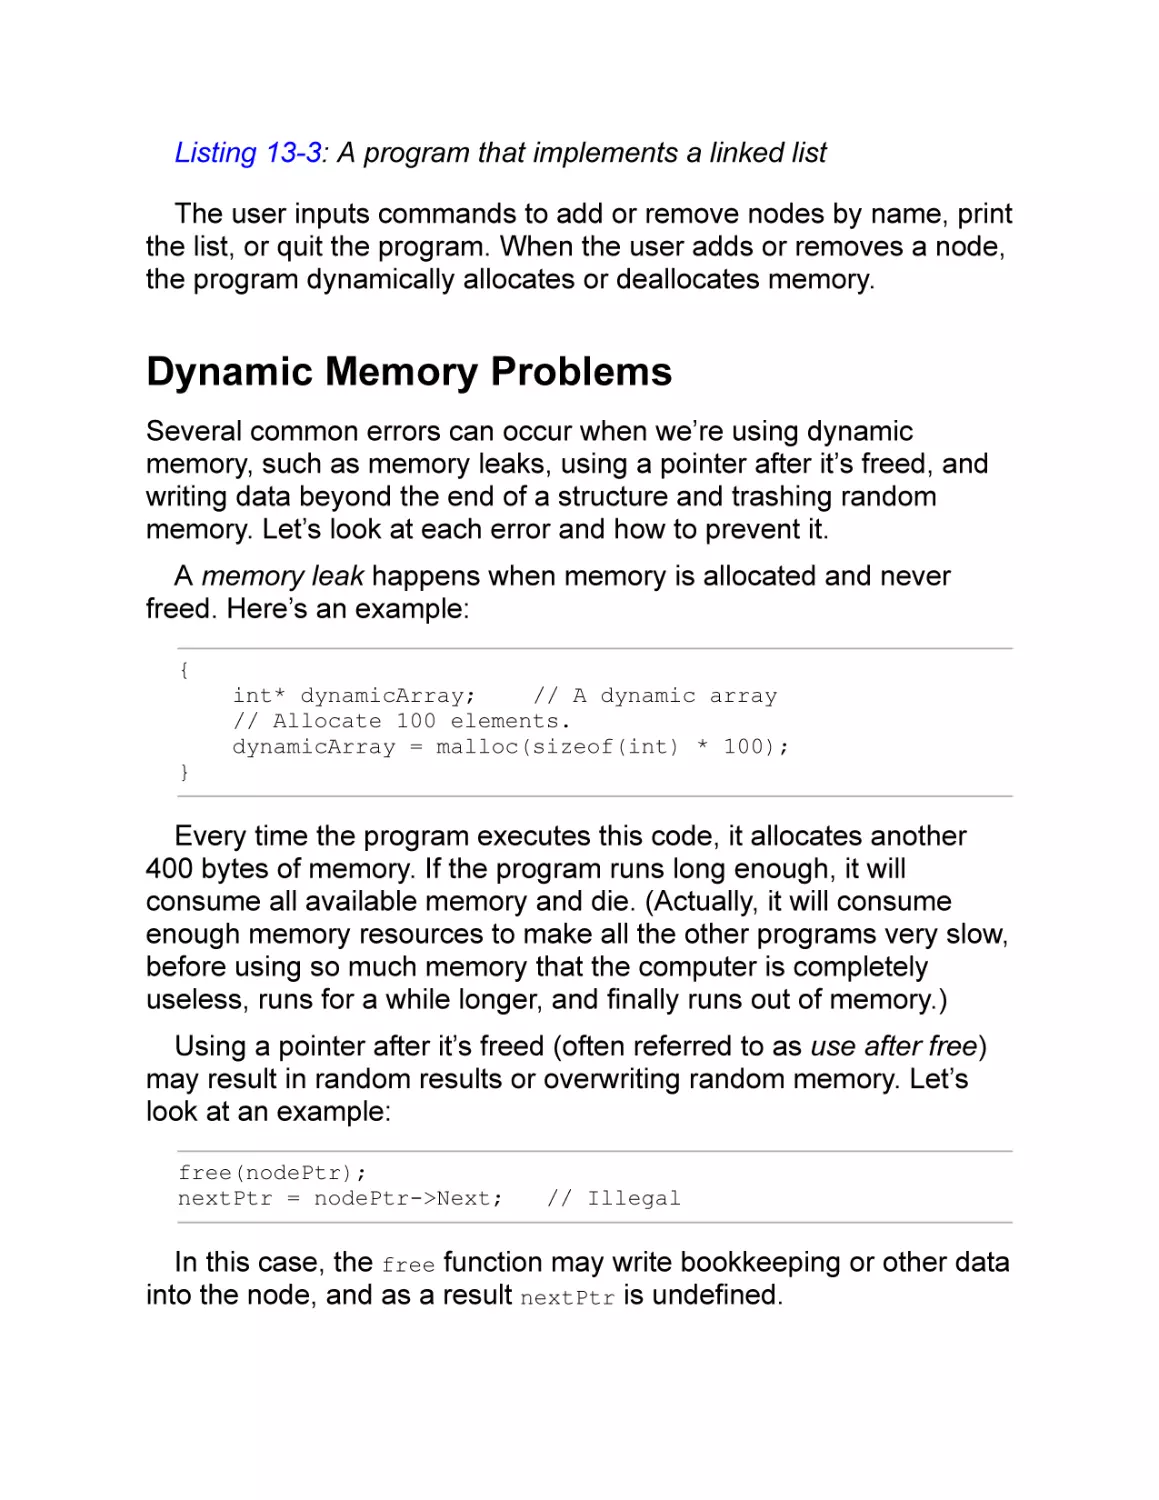 Dynamic Memory Problems